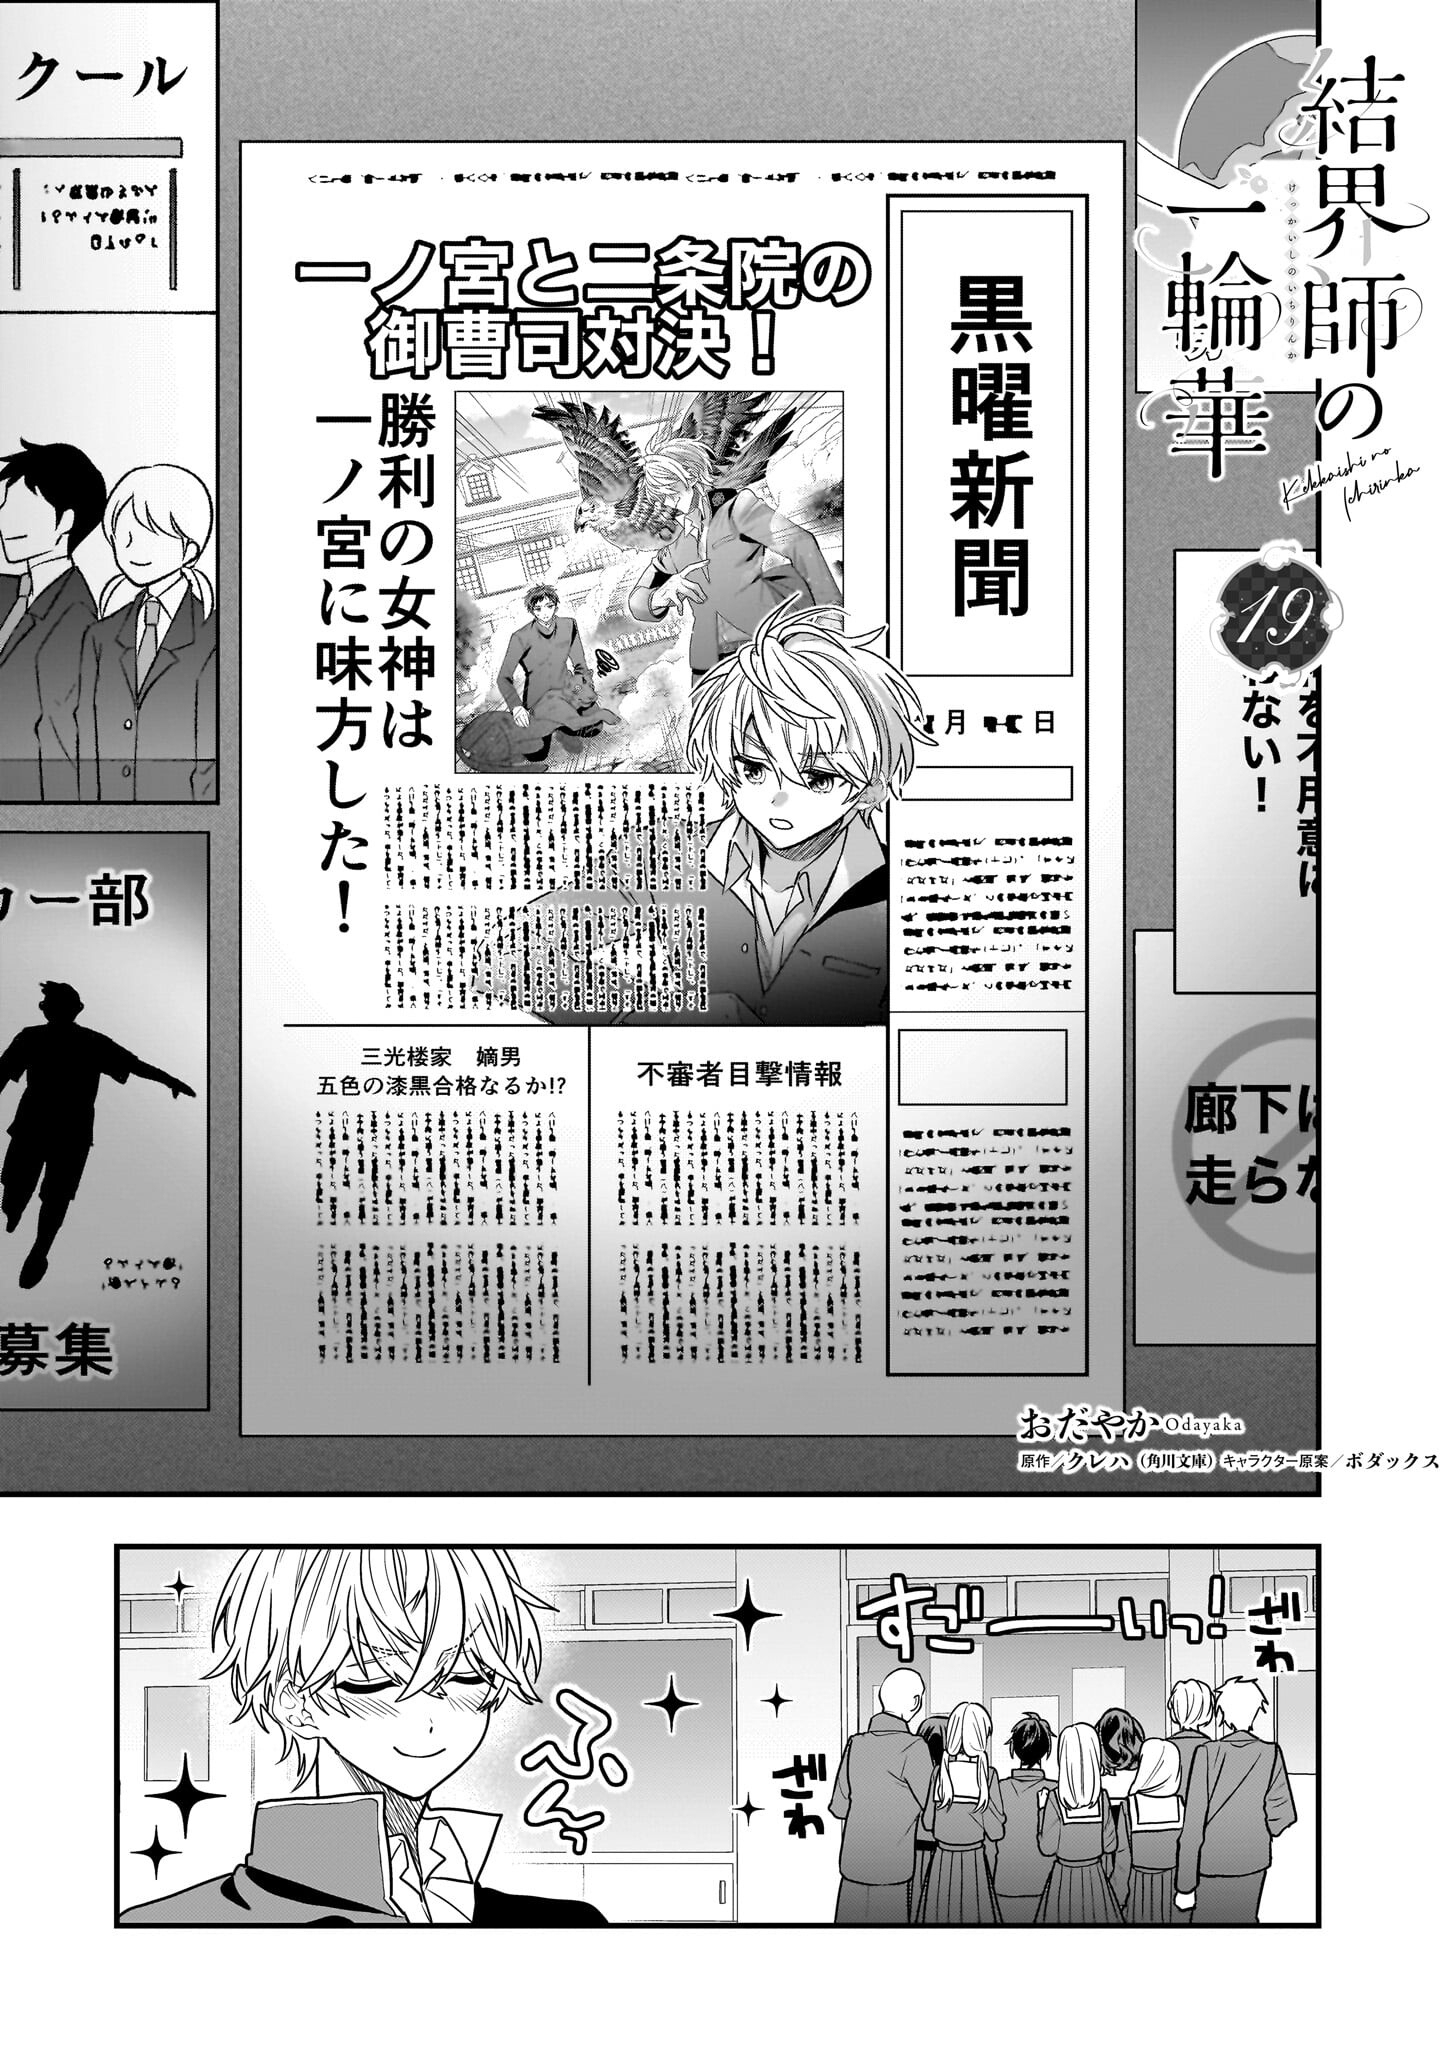 Kekkaishi no Ichirinka - Chapter 19 - Page 1